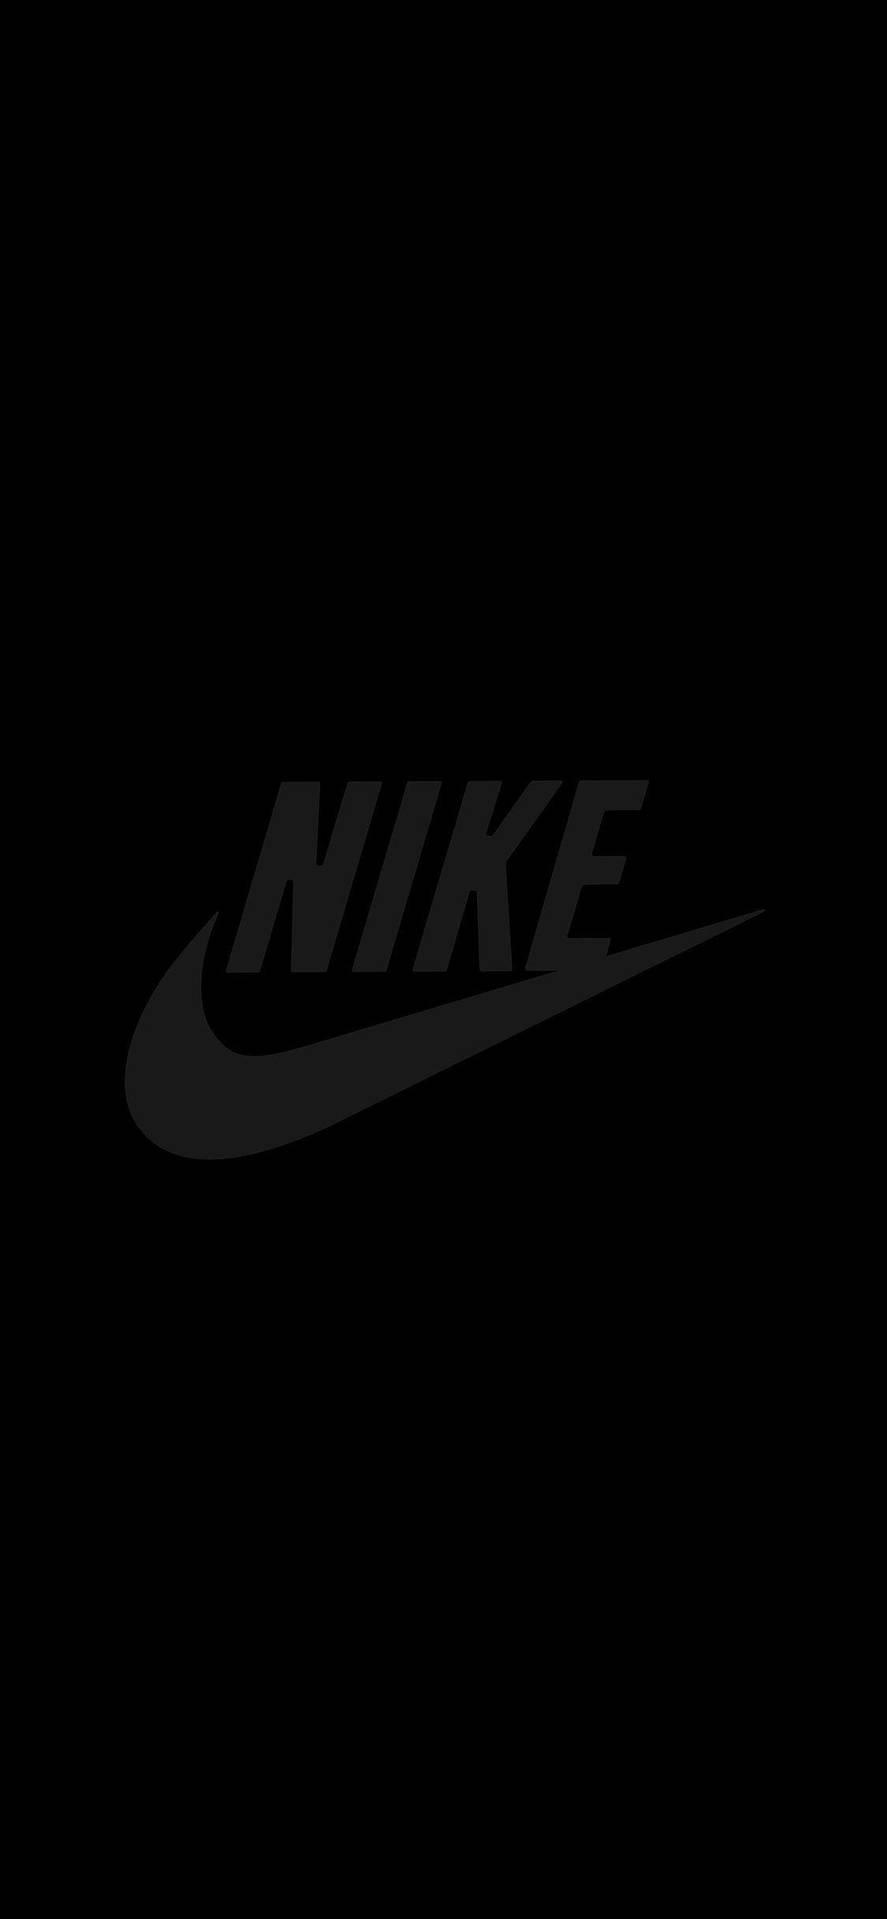 All Black Nike iPhone Wallpaper